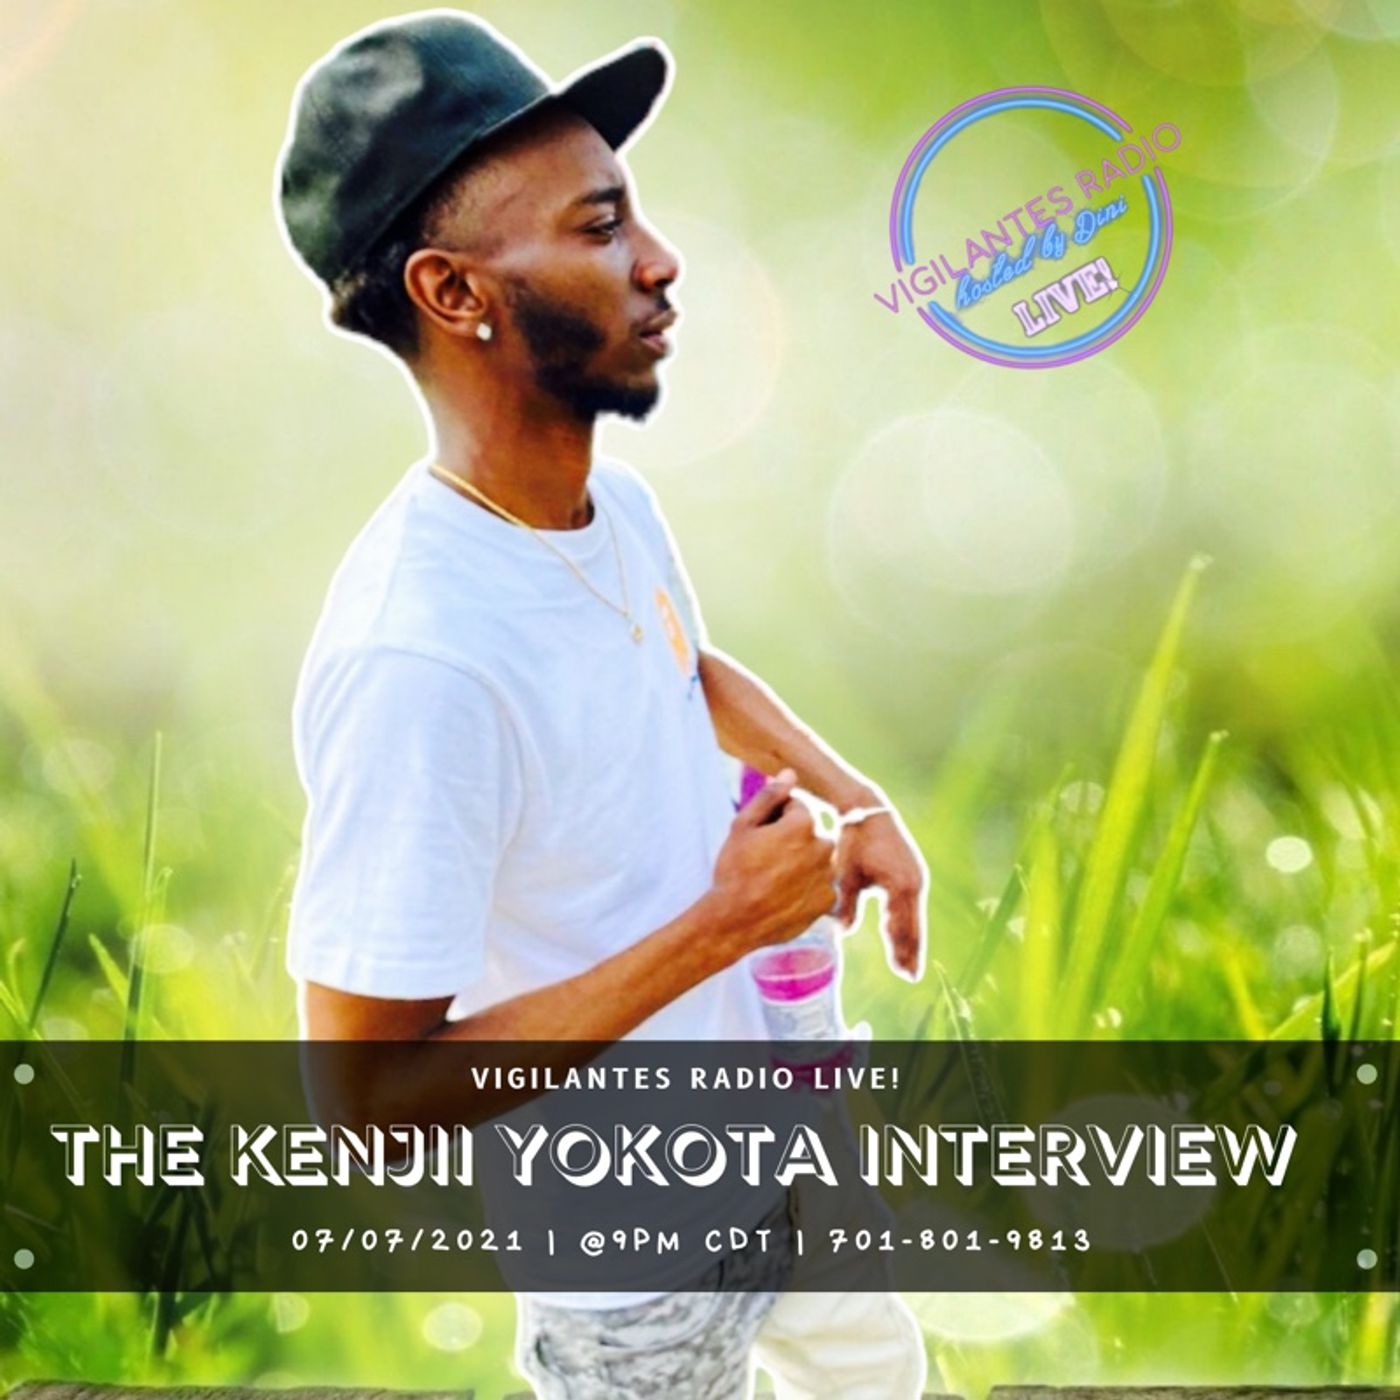 The Kenjii Yokota Interview. Image